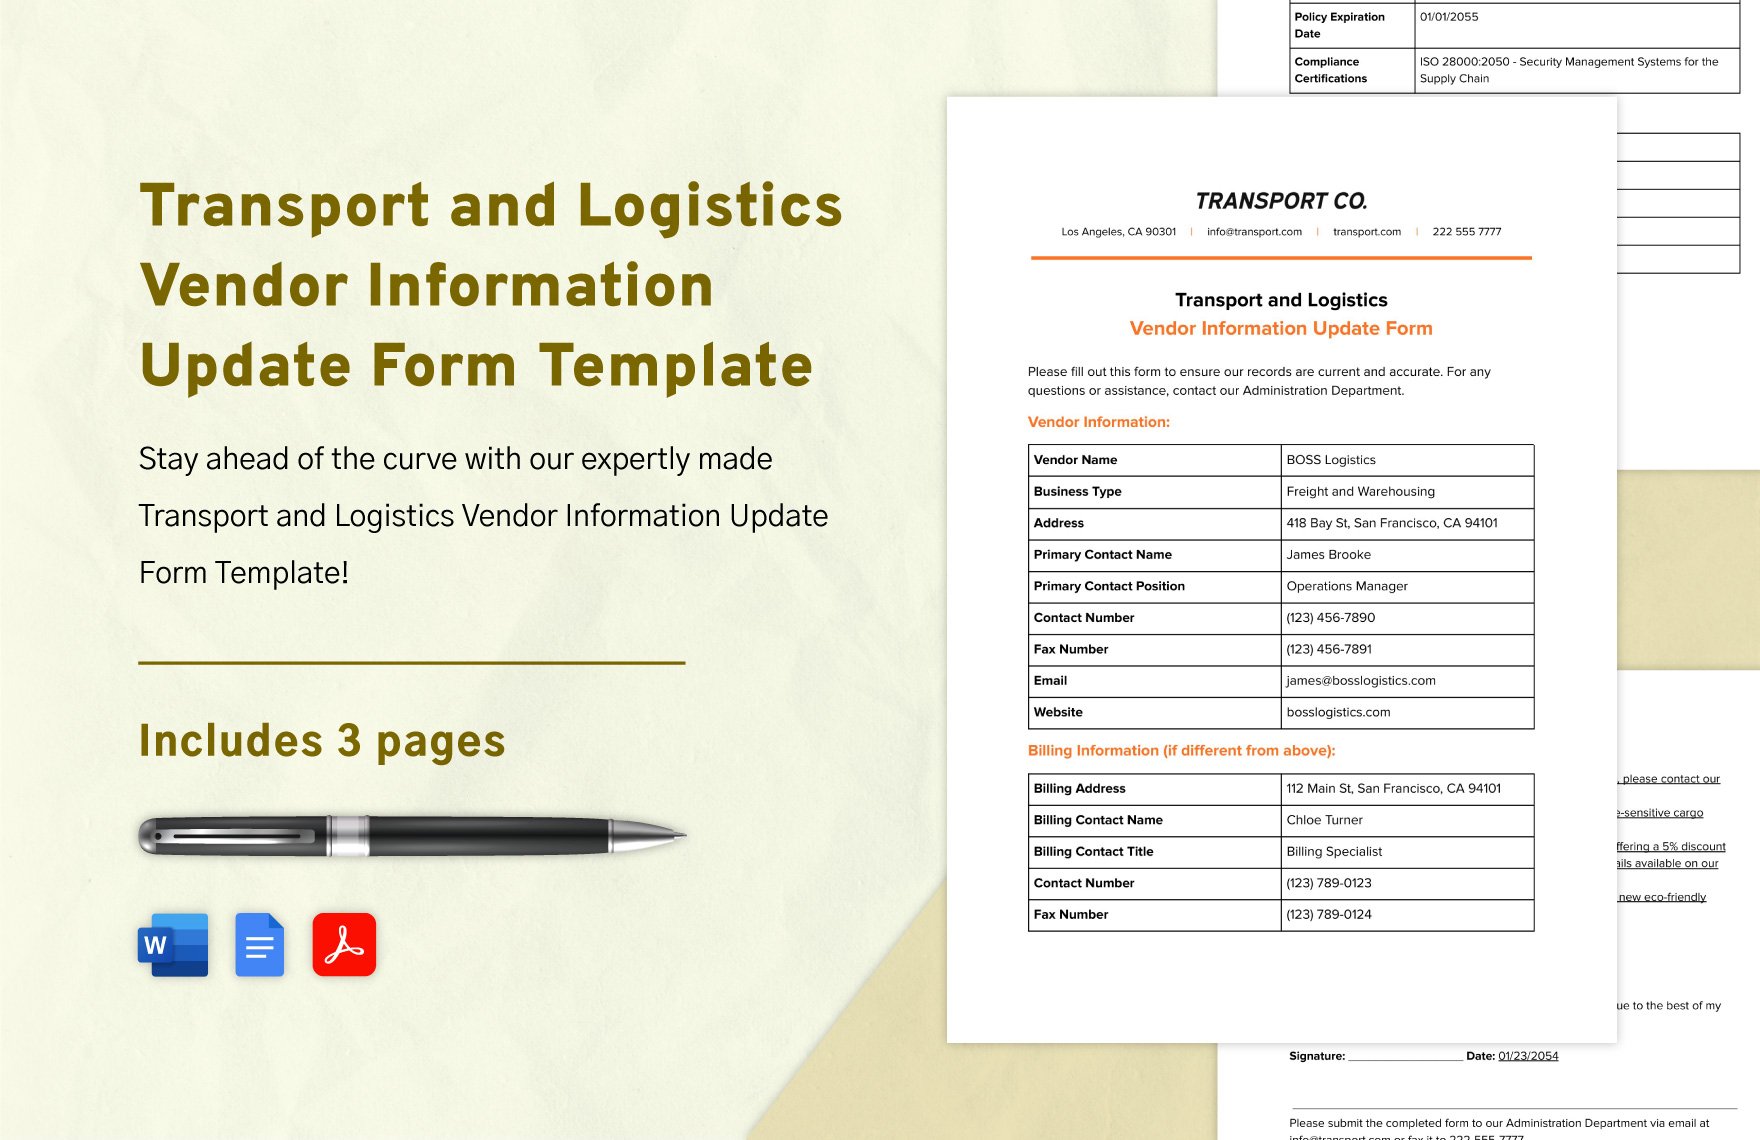 Transport and Logistics Vendor Information Update Form Template